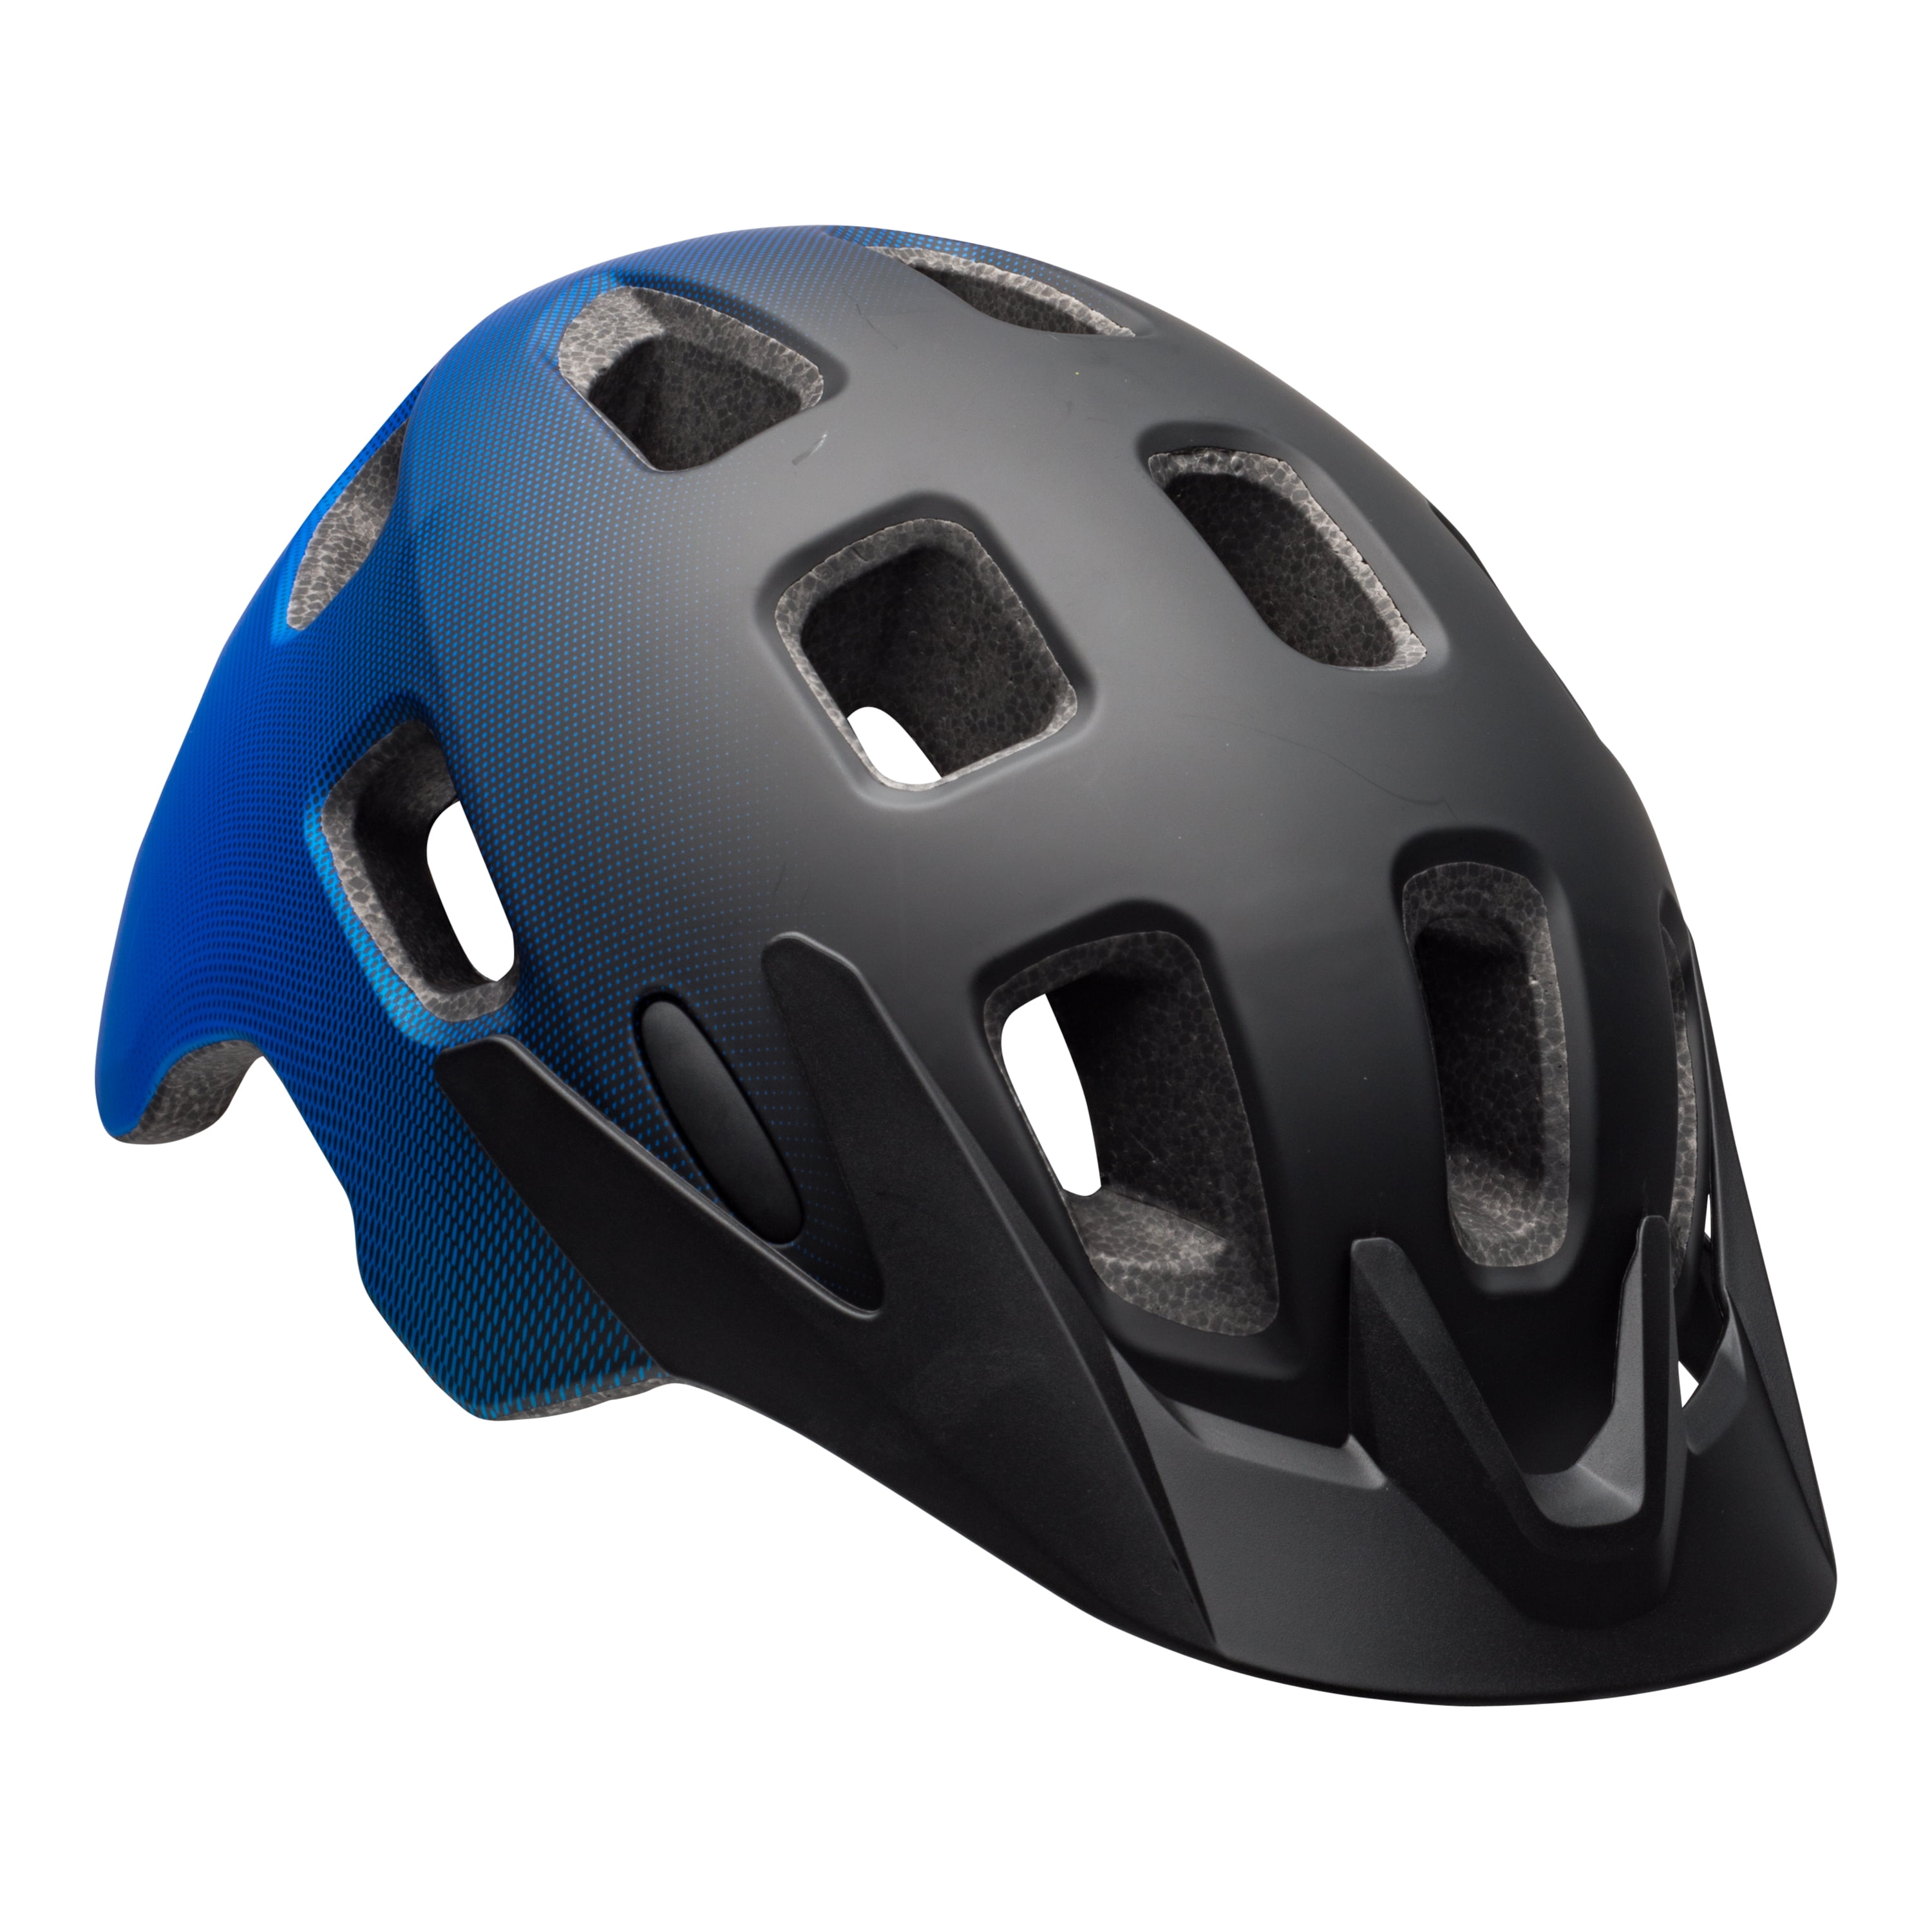 Zefal Zen-X Pro Youth Bike Helmet w/ 22 Integrated Vents ages 7-14 NIB 